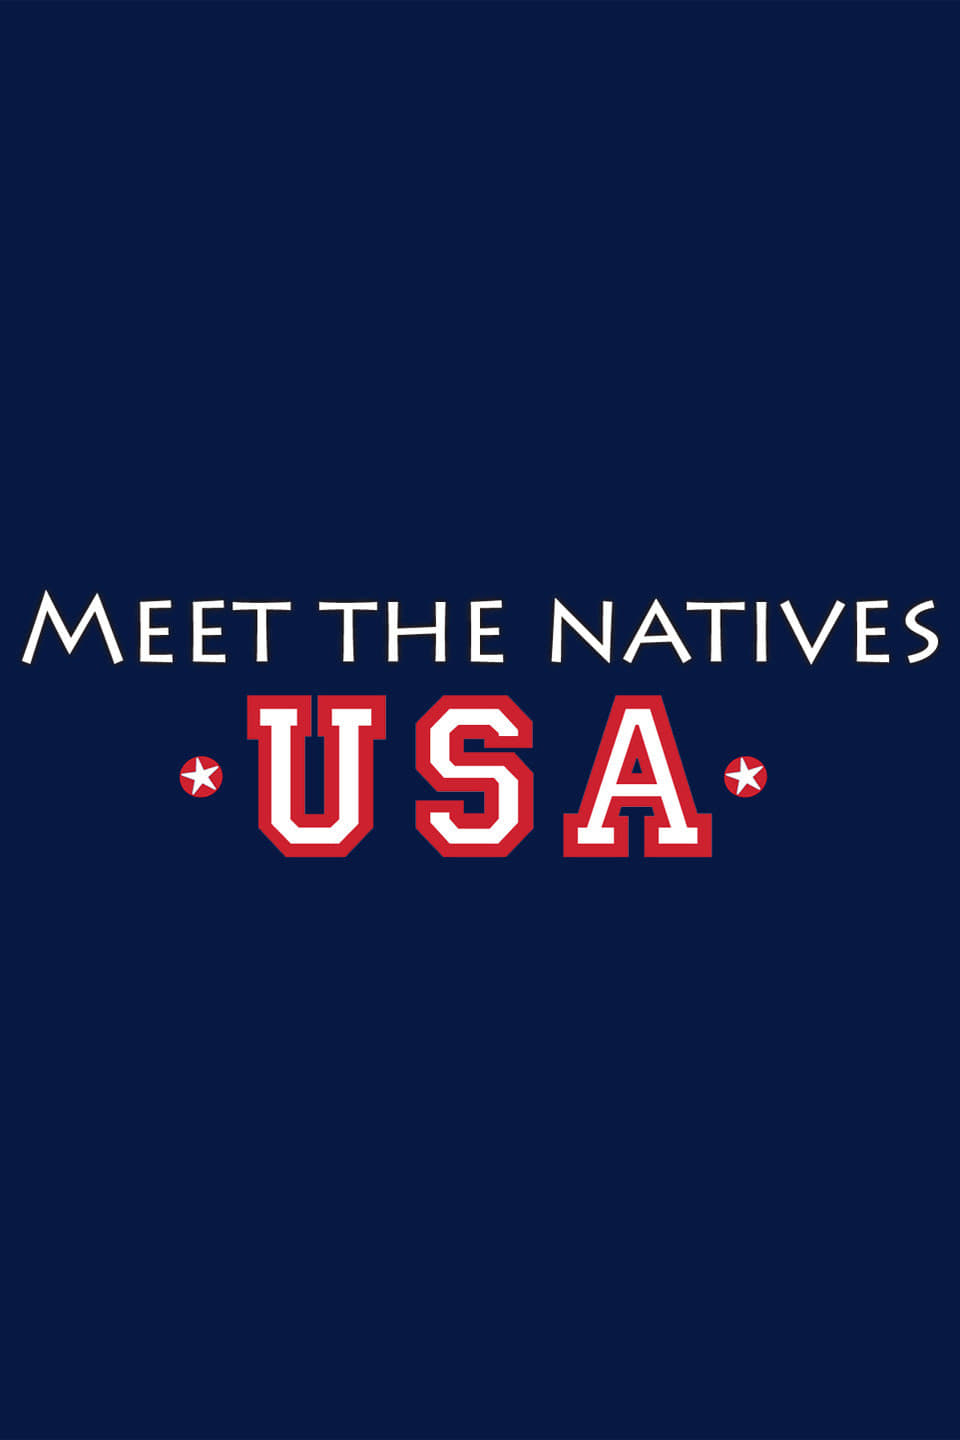 Meet the Natives: USA